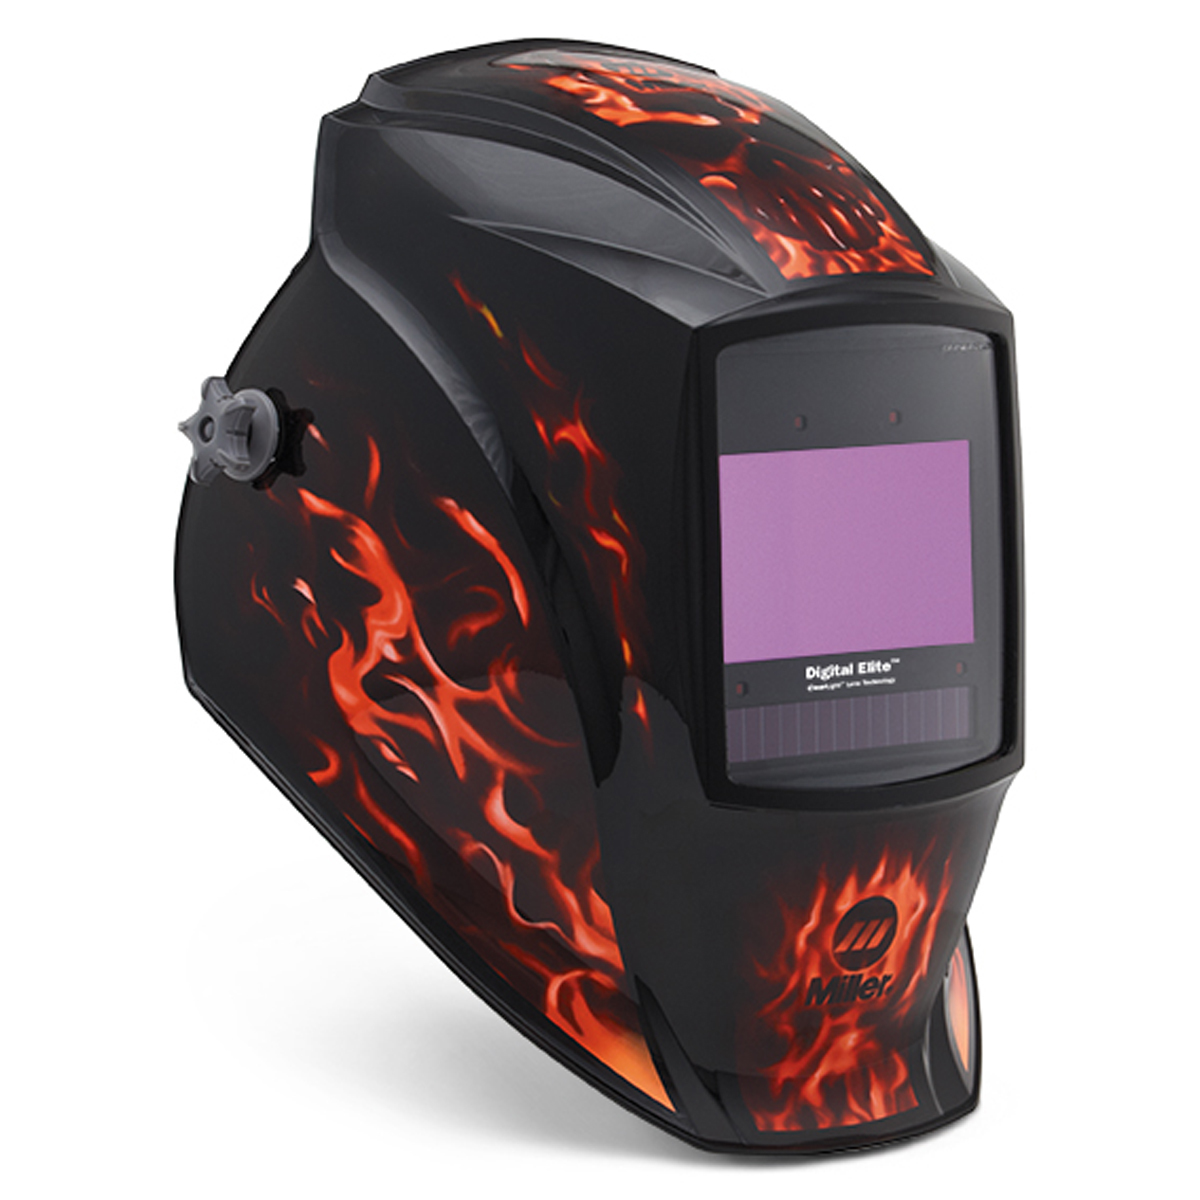 Miller® Digital Elite™ Black/Red Welding Helmet Variable Shades 3, 5 - 13 Auto Darkening Lens